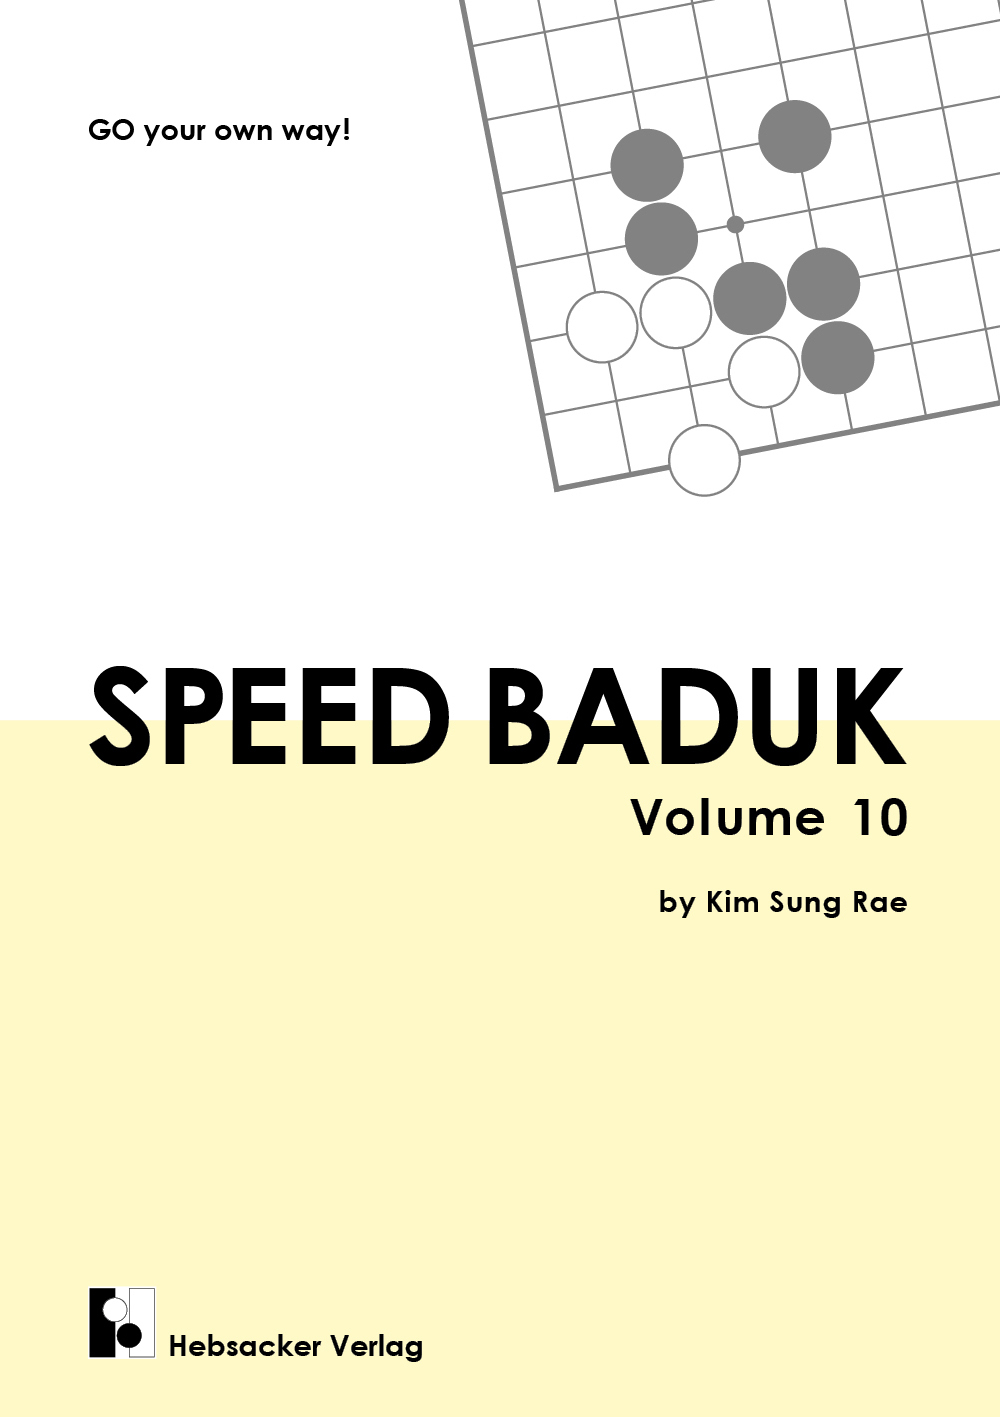 Speed baduk vol 10